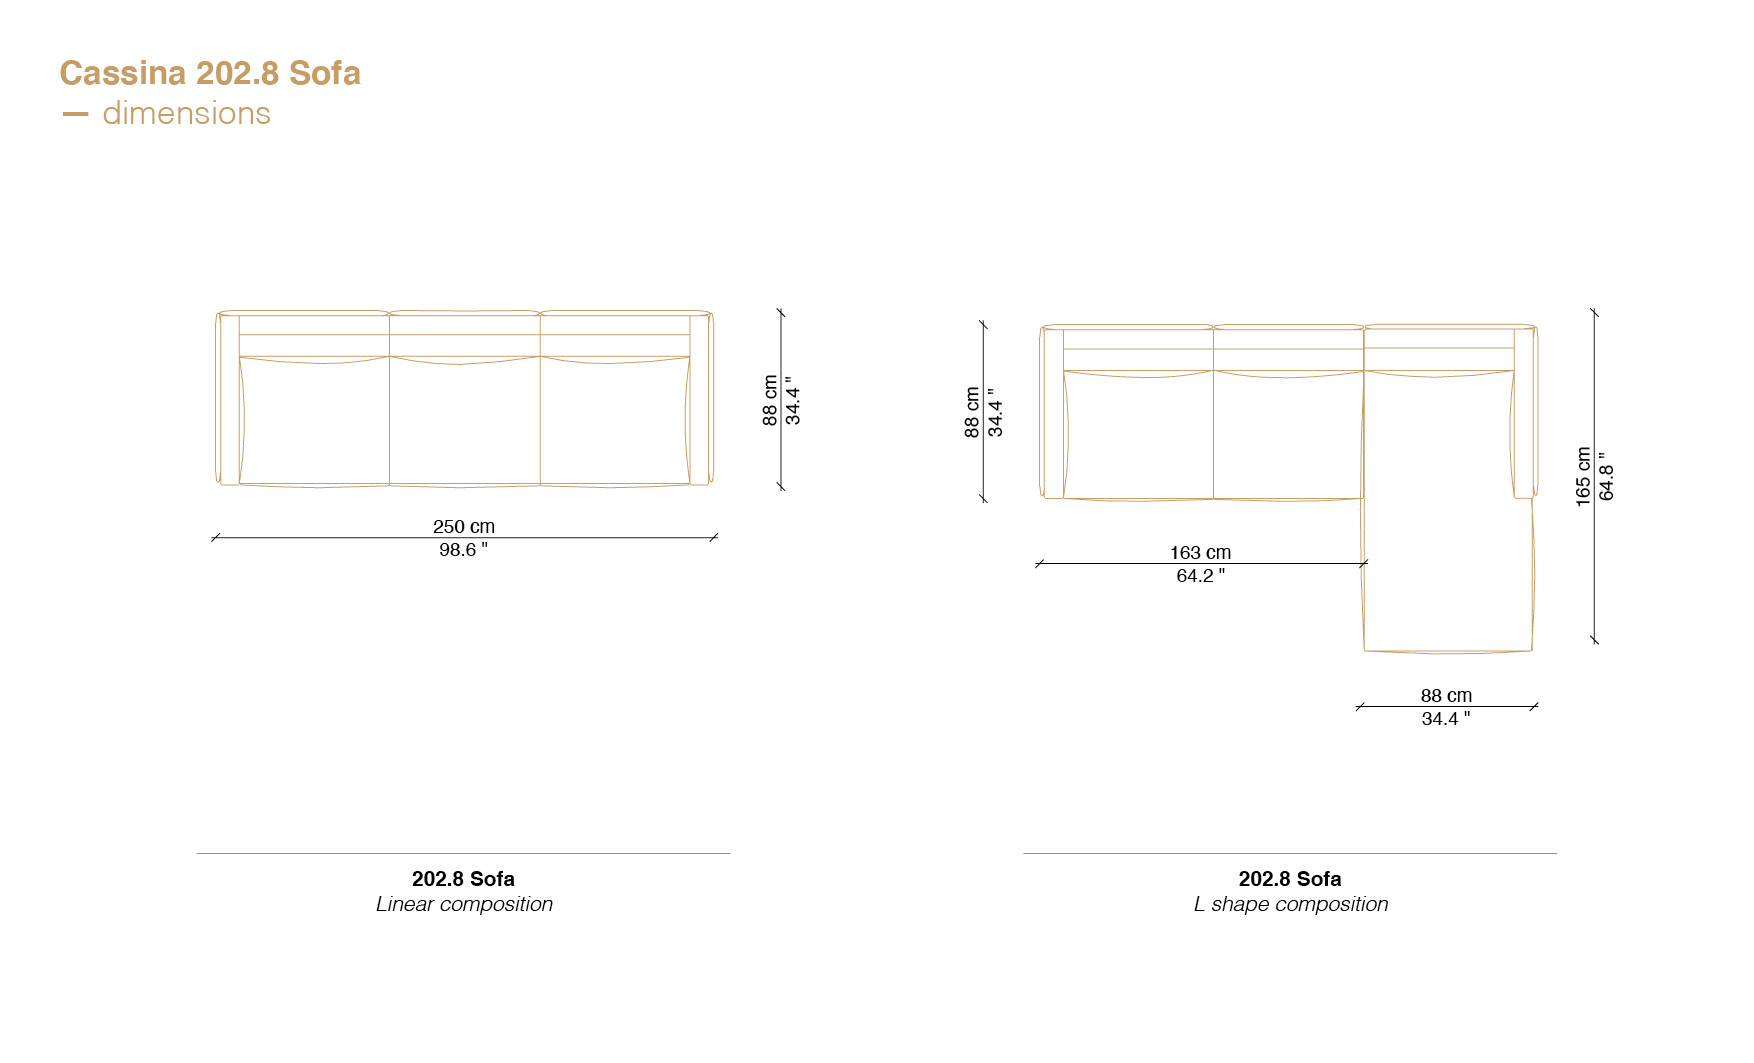 202.8 sofa compositions and Cassina sofa price